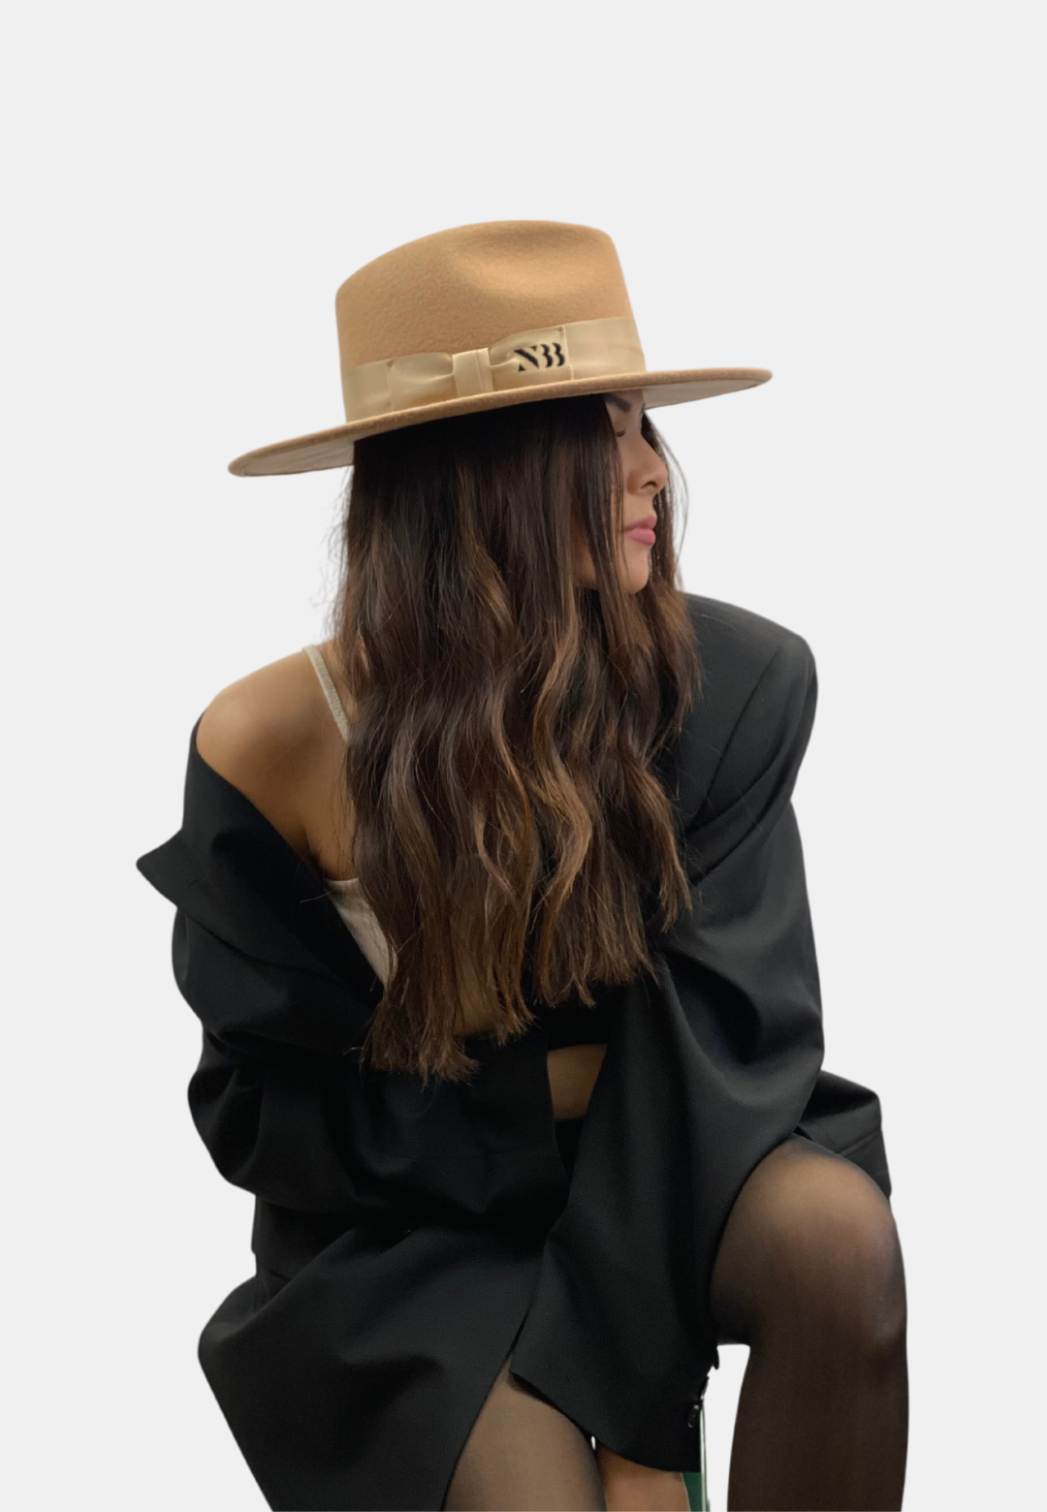 NTHIRTYTHREE - N33 - Handcrafted Wide Brim Fedora Felt Hat - Rancher Desert Sand Handmade Fedora Hat Organic Wool